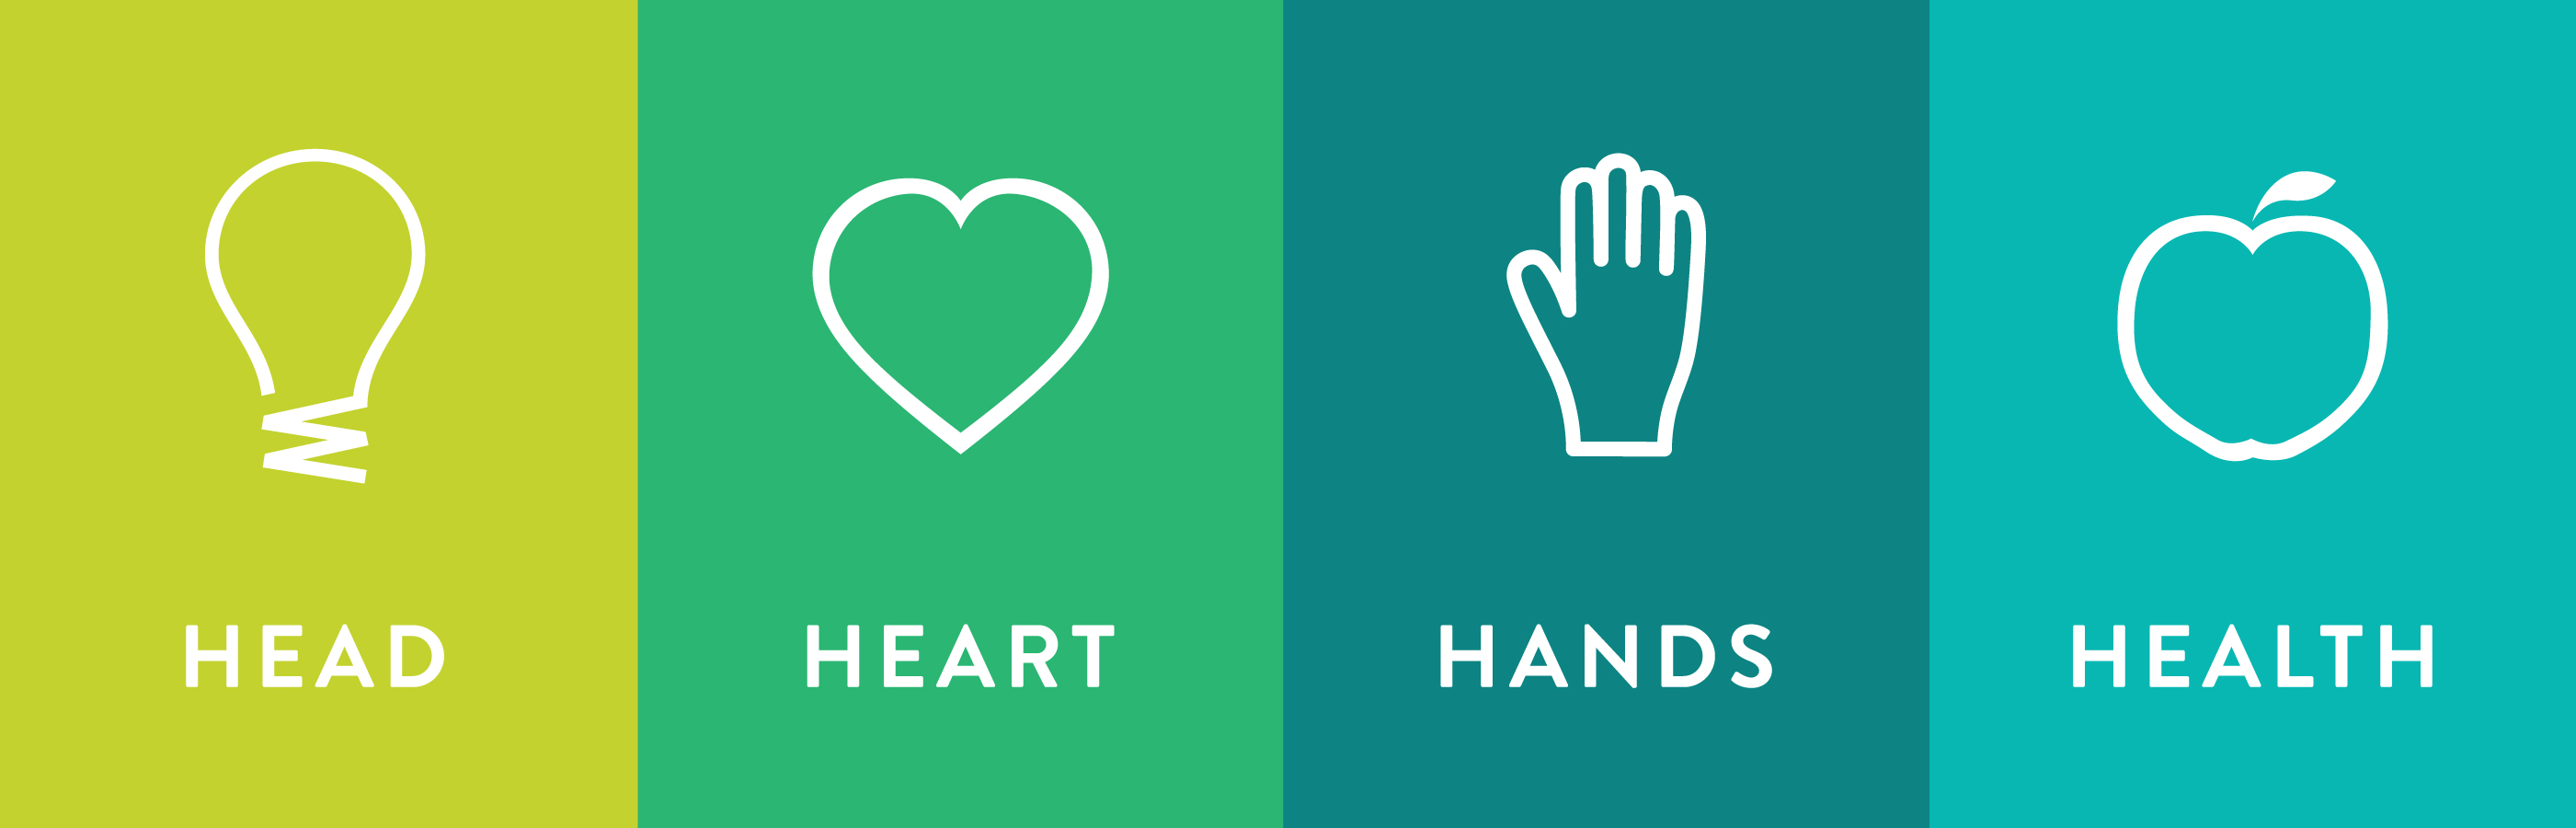 Head heart hands health